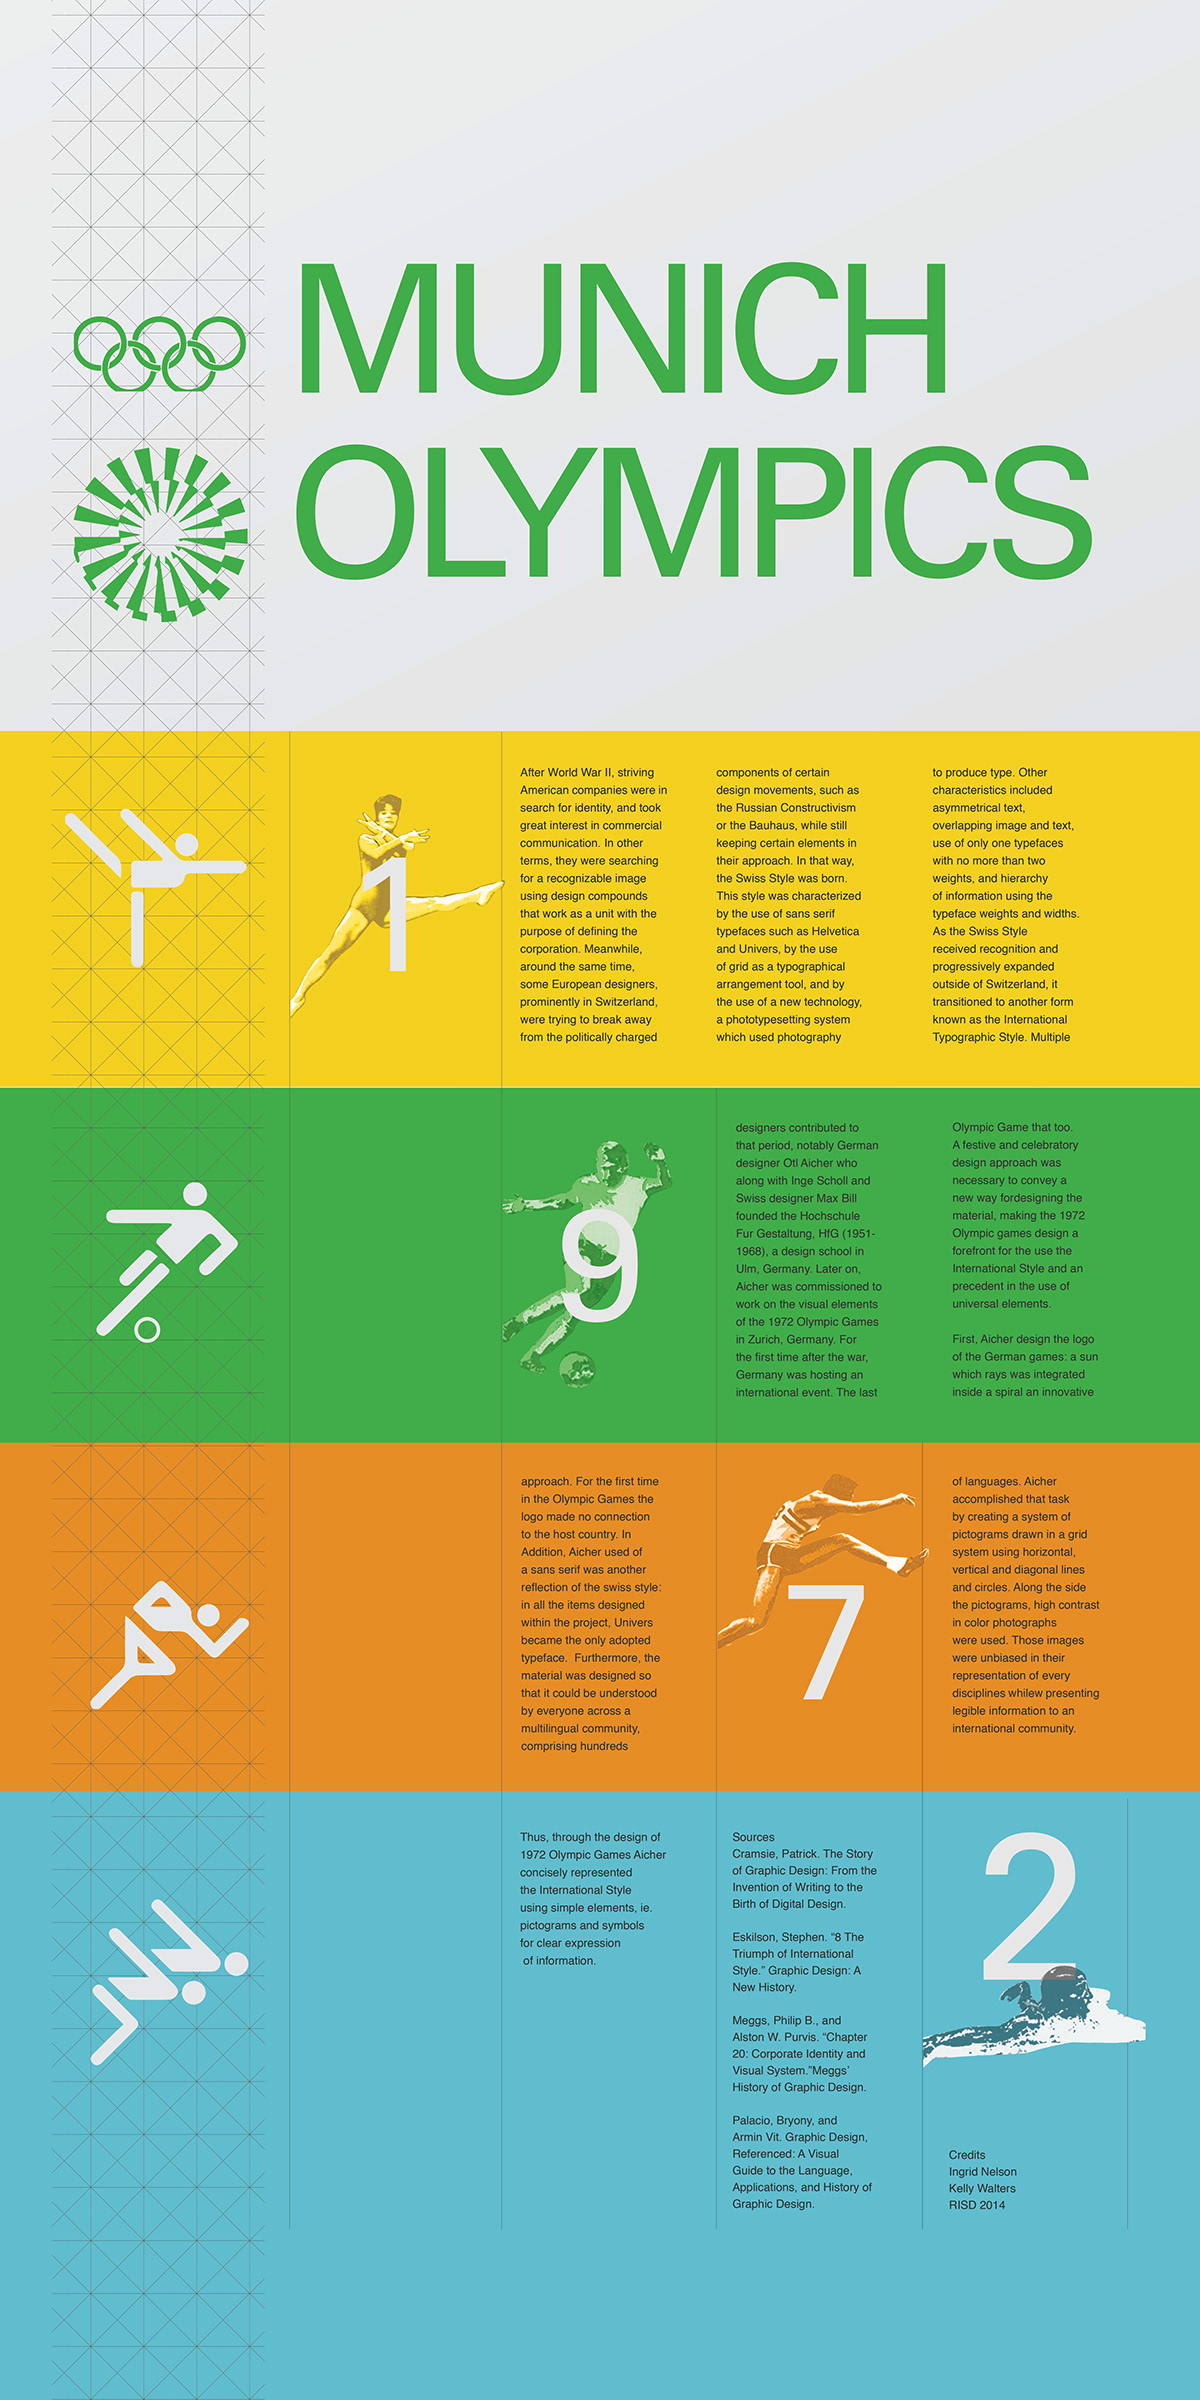 design olympic poster munich olympics